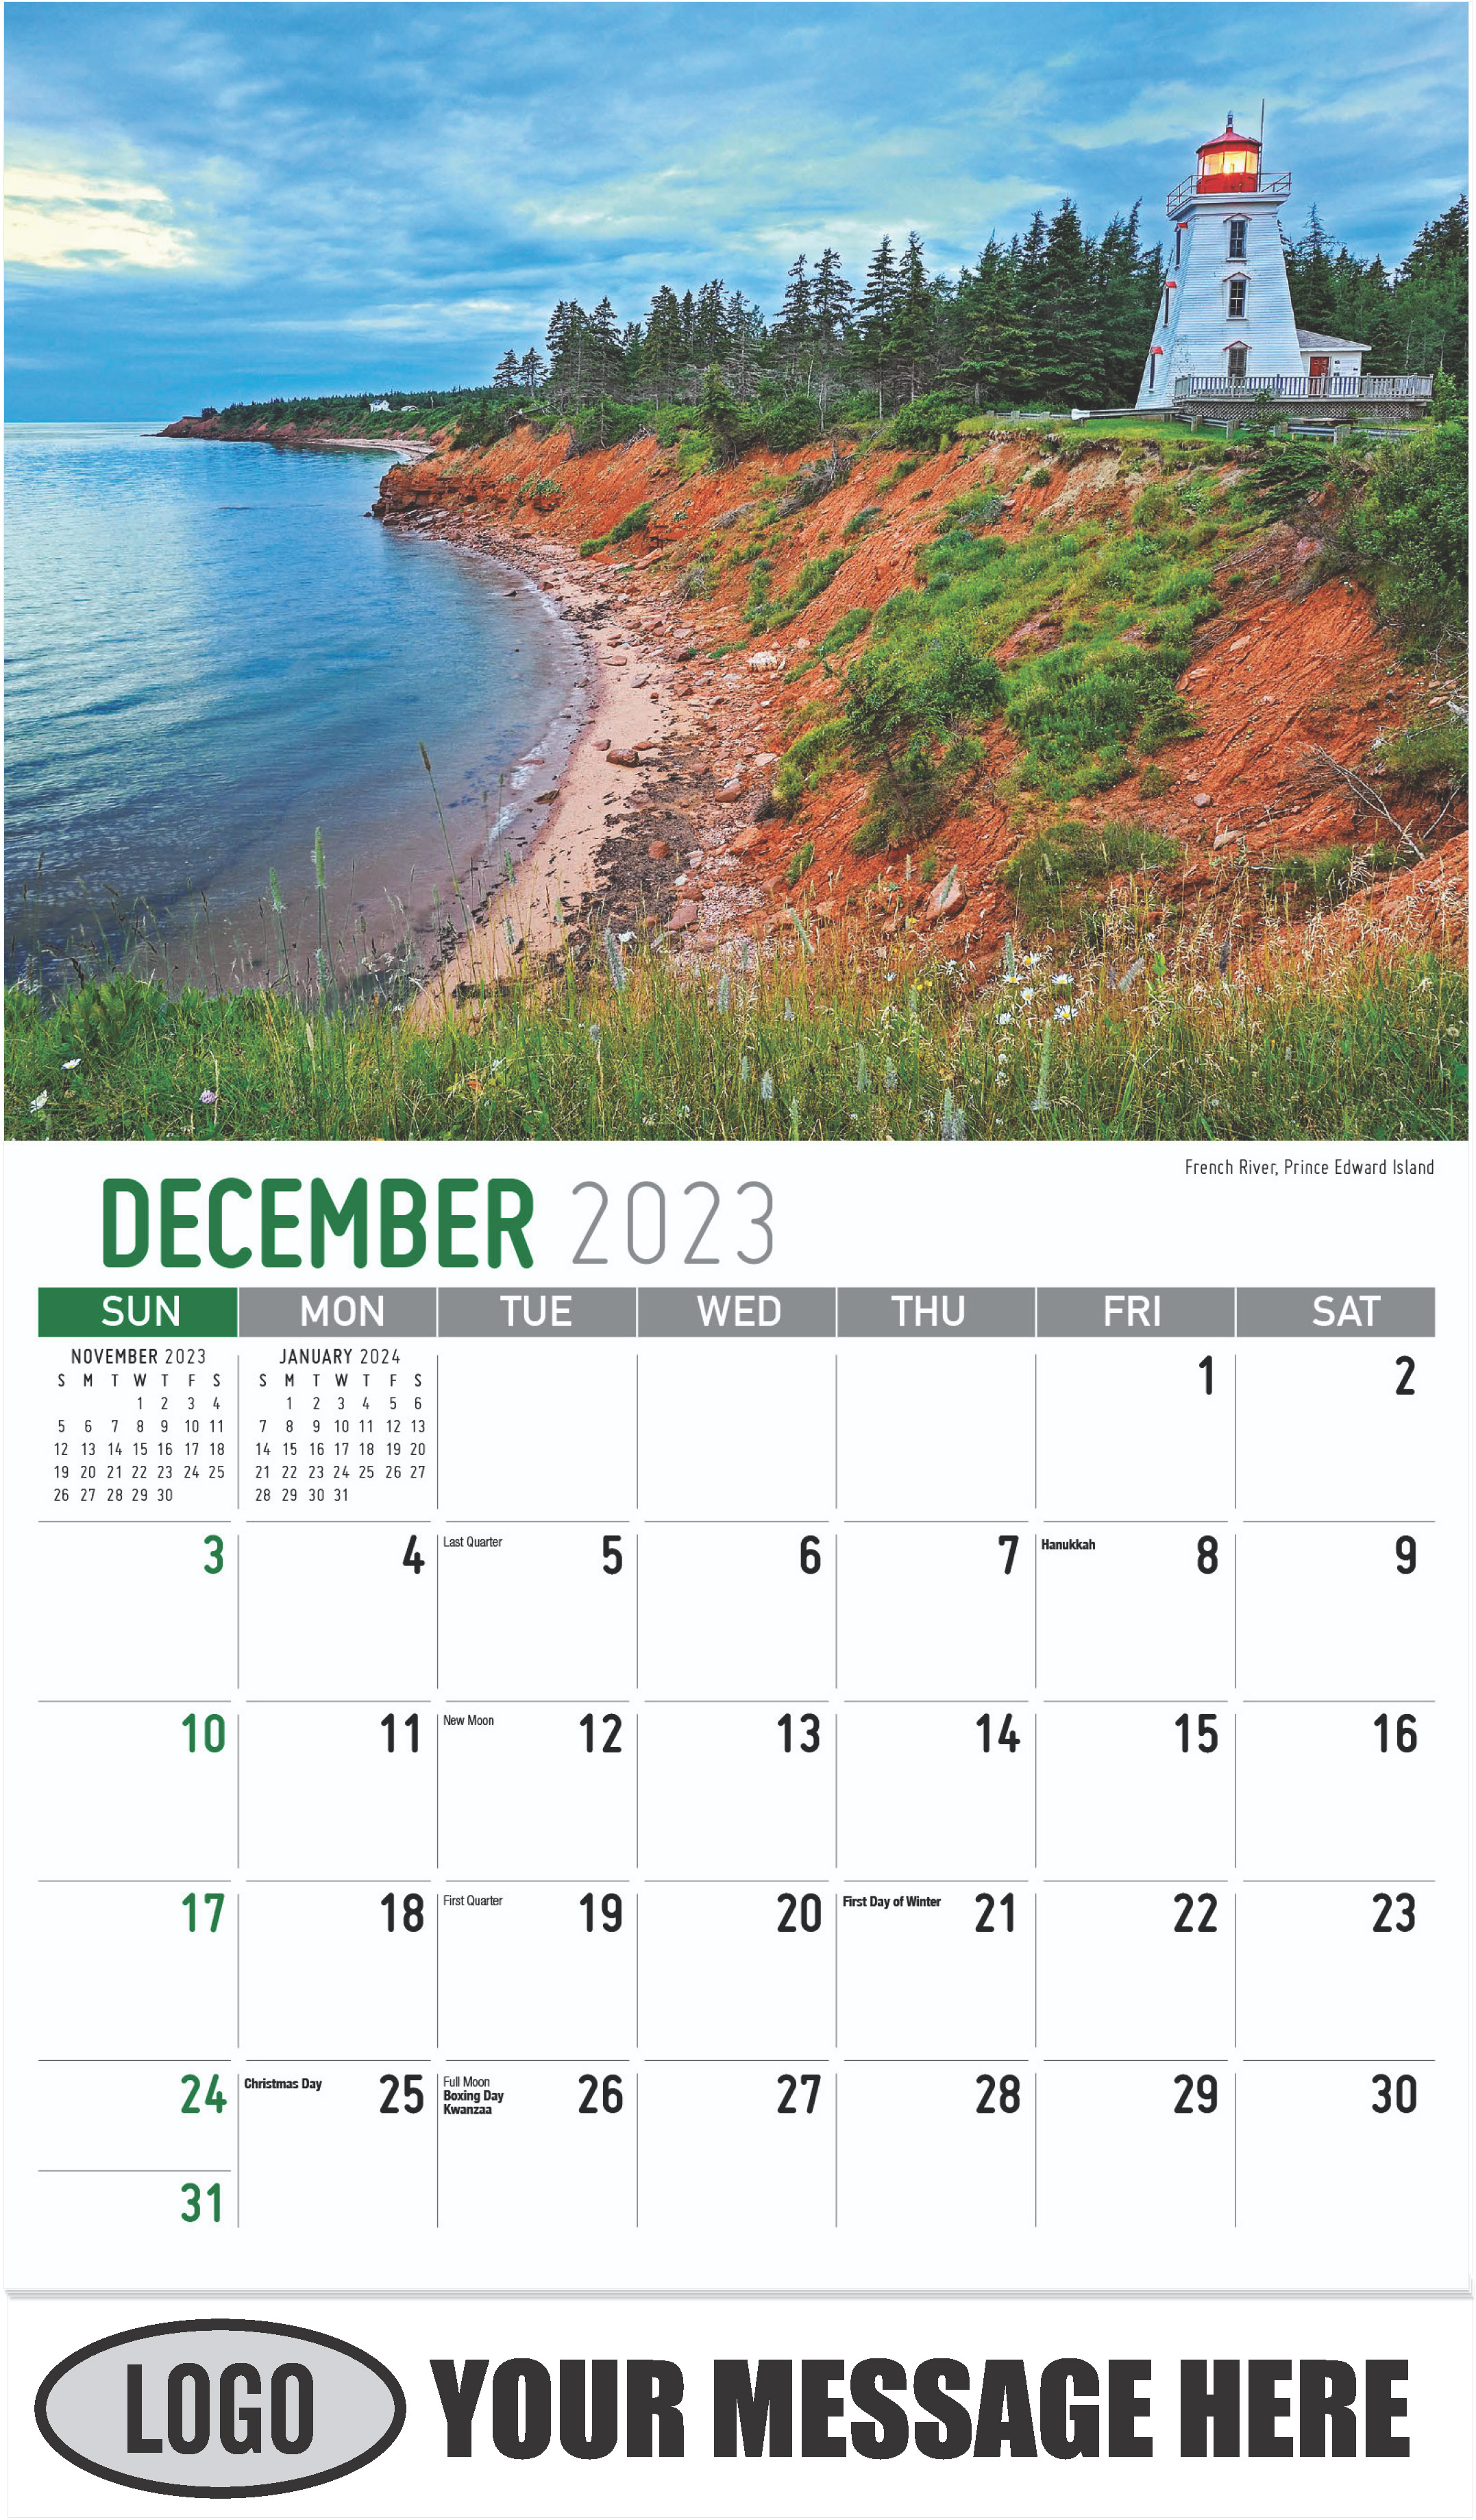 French River, Prince Edward Island - December 2023 - Atlantic Canada 2023 Promotional Calendar